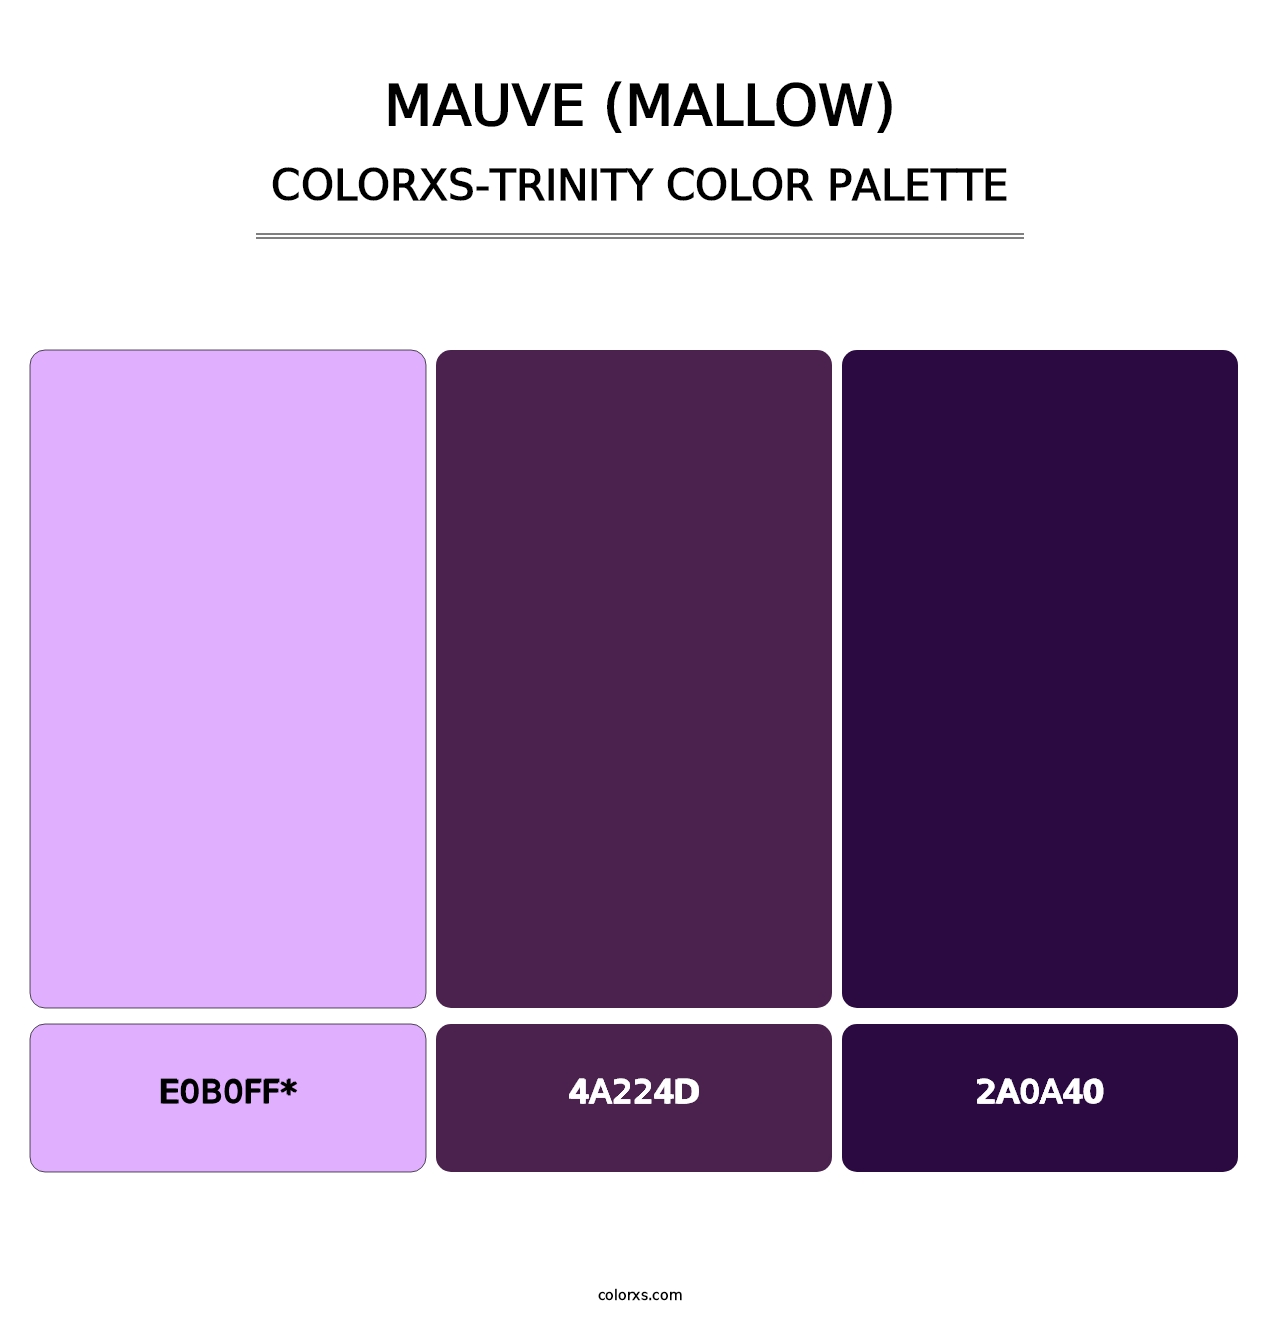 Mauve (Mallow) - Colorxs Trinity Palette